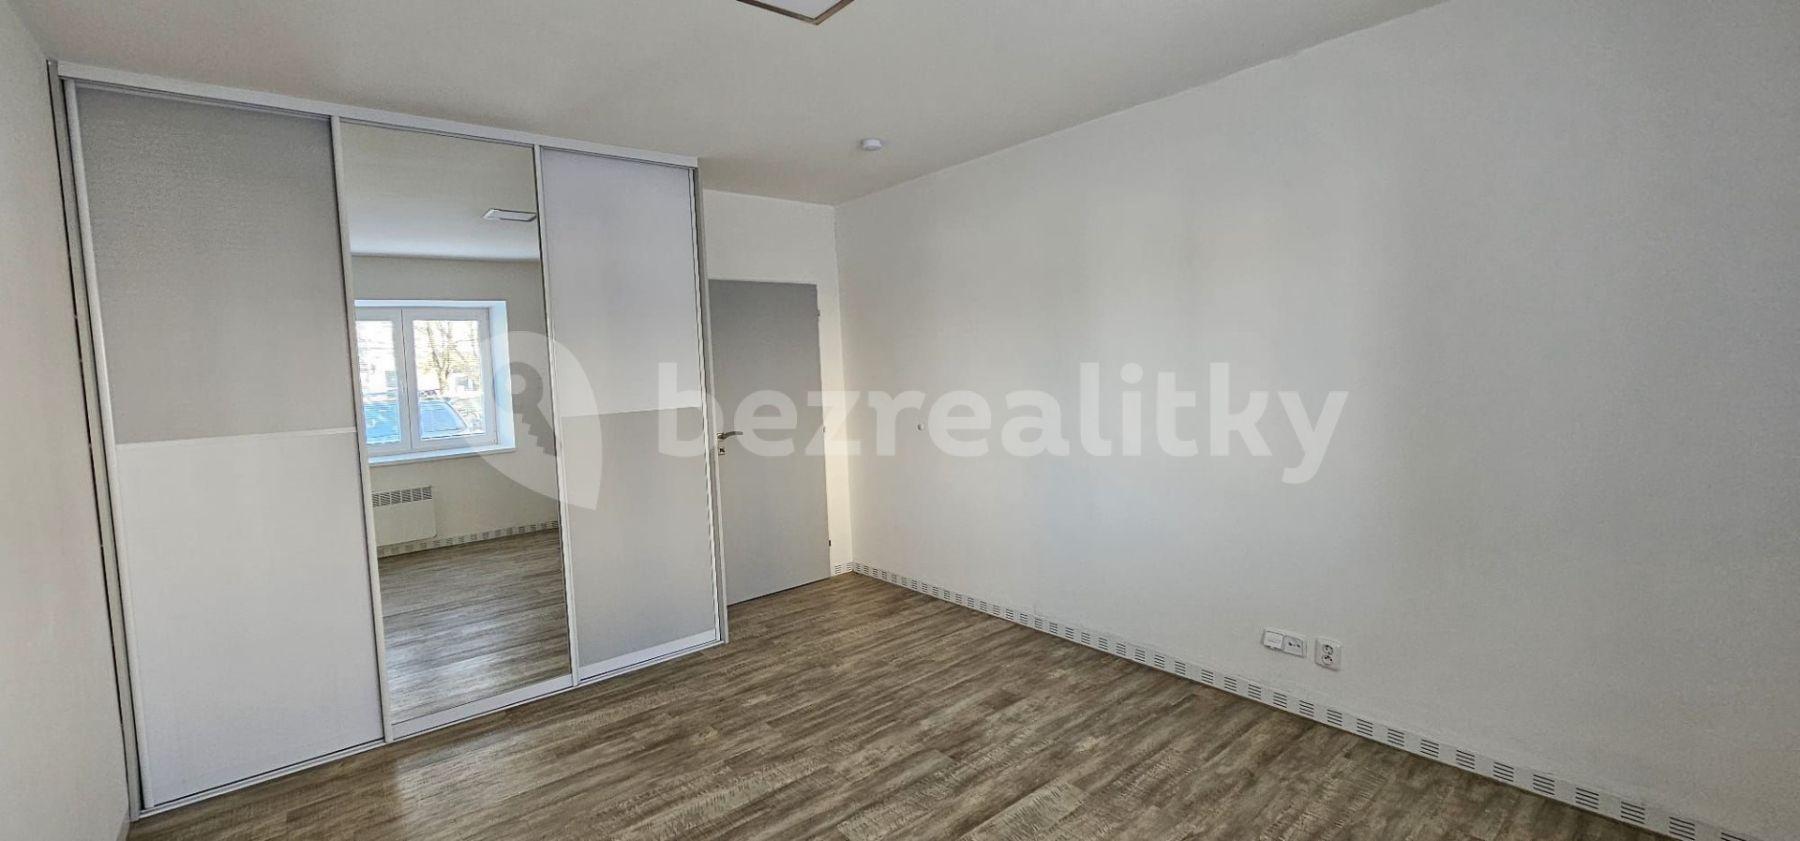 1 bedroom with open-plan kitchen flat to rent, 54 m², Olomoucká, Šternberk, Olomoucký Region